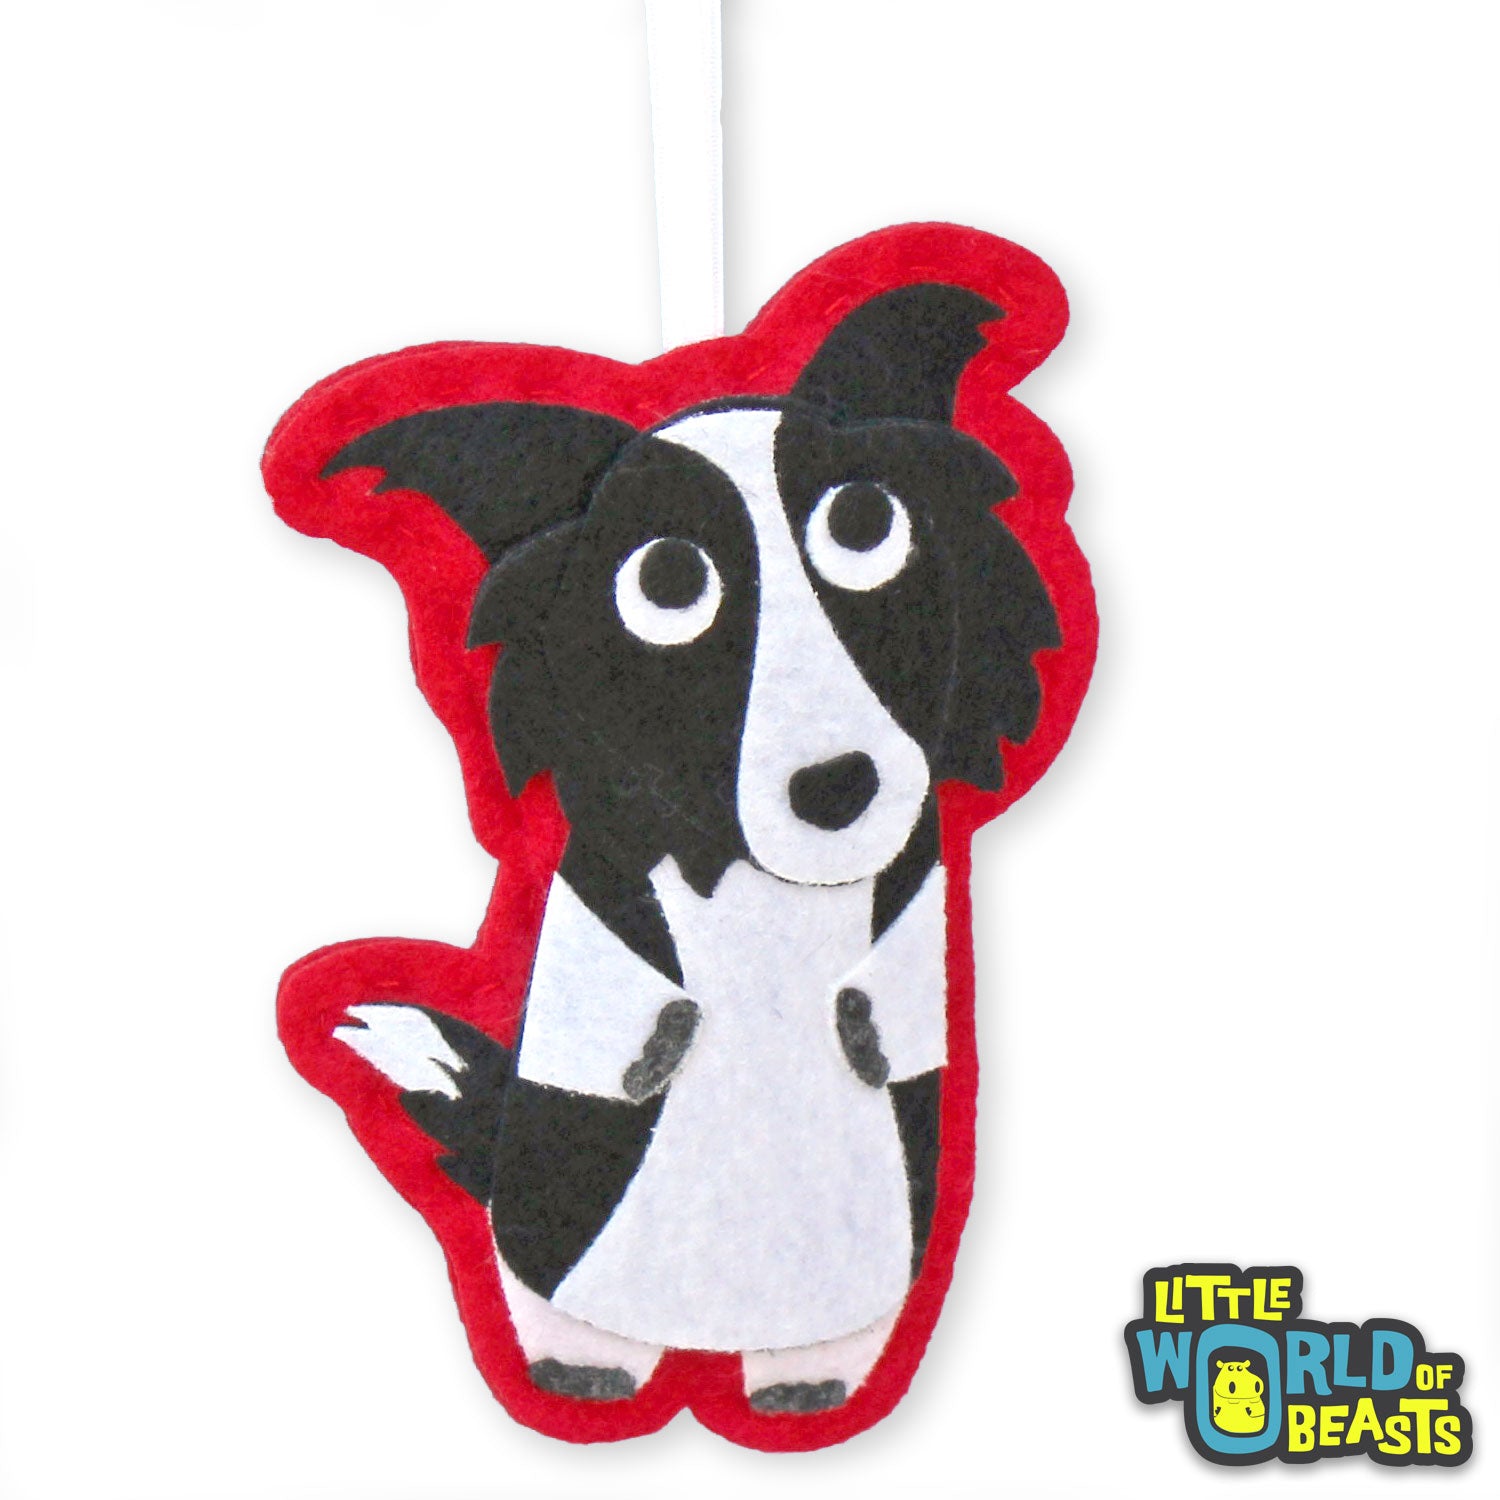 Peronslizable Felt Dog Ornament - Border Collie